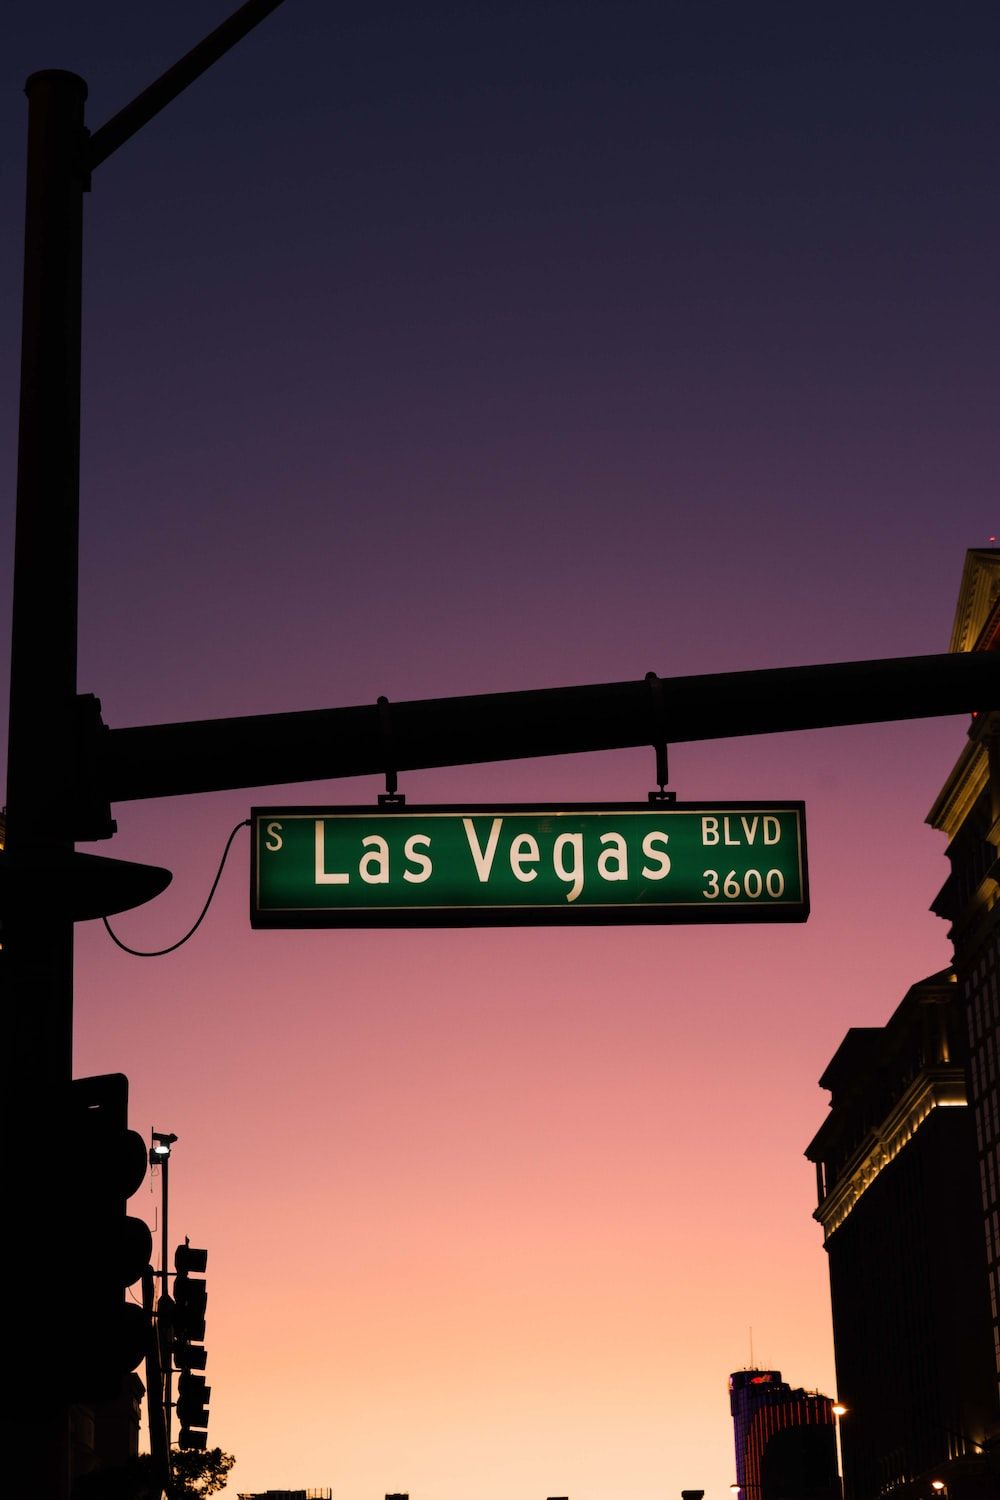 A street sign for Las Vegas Blvd at sunset. - Las Vegas